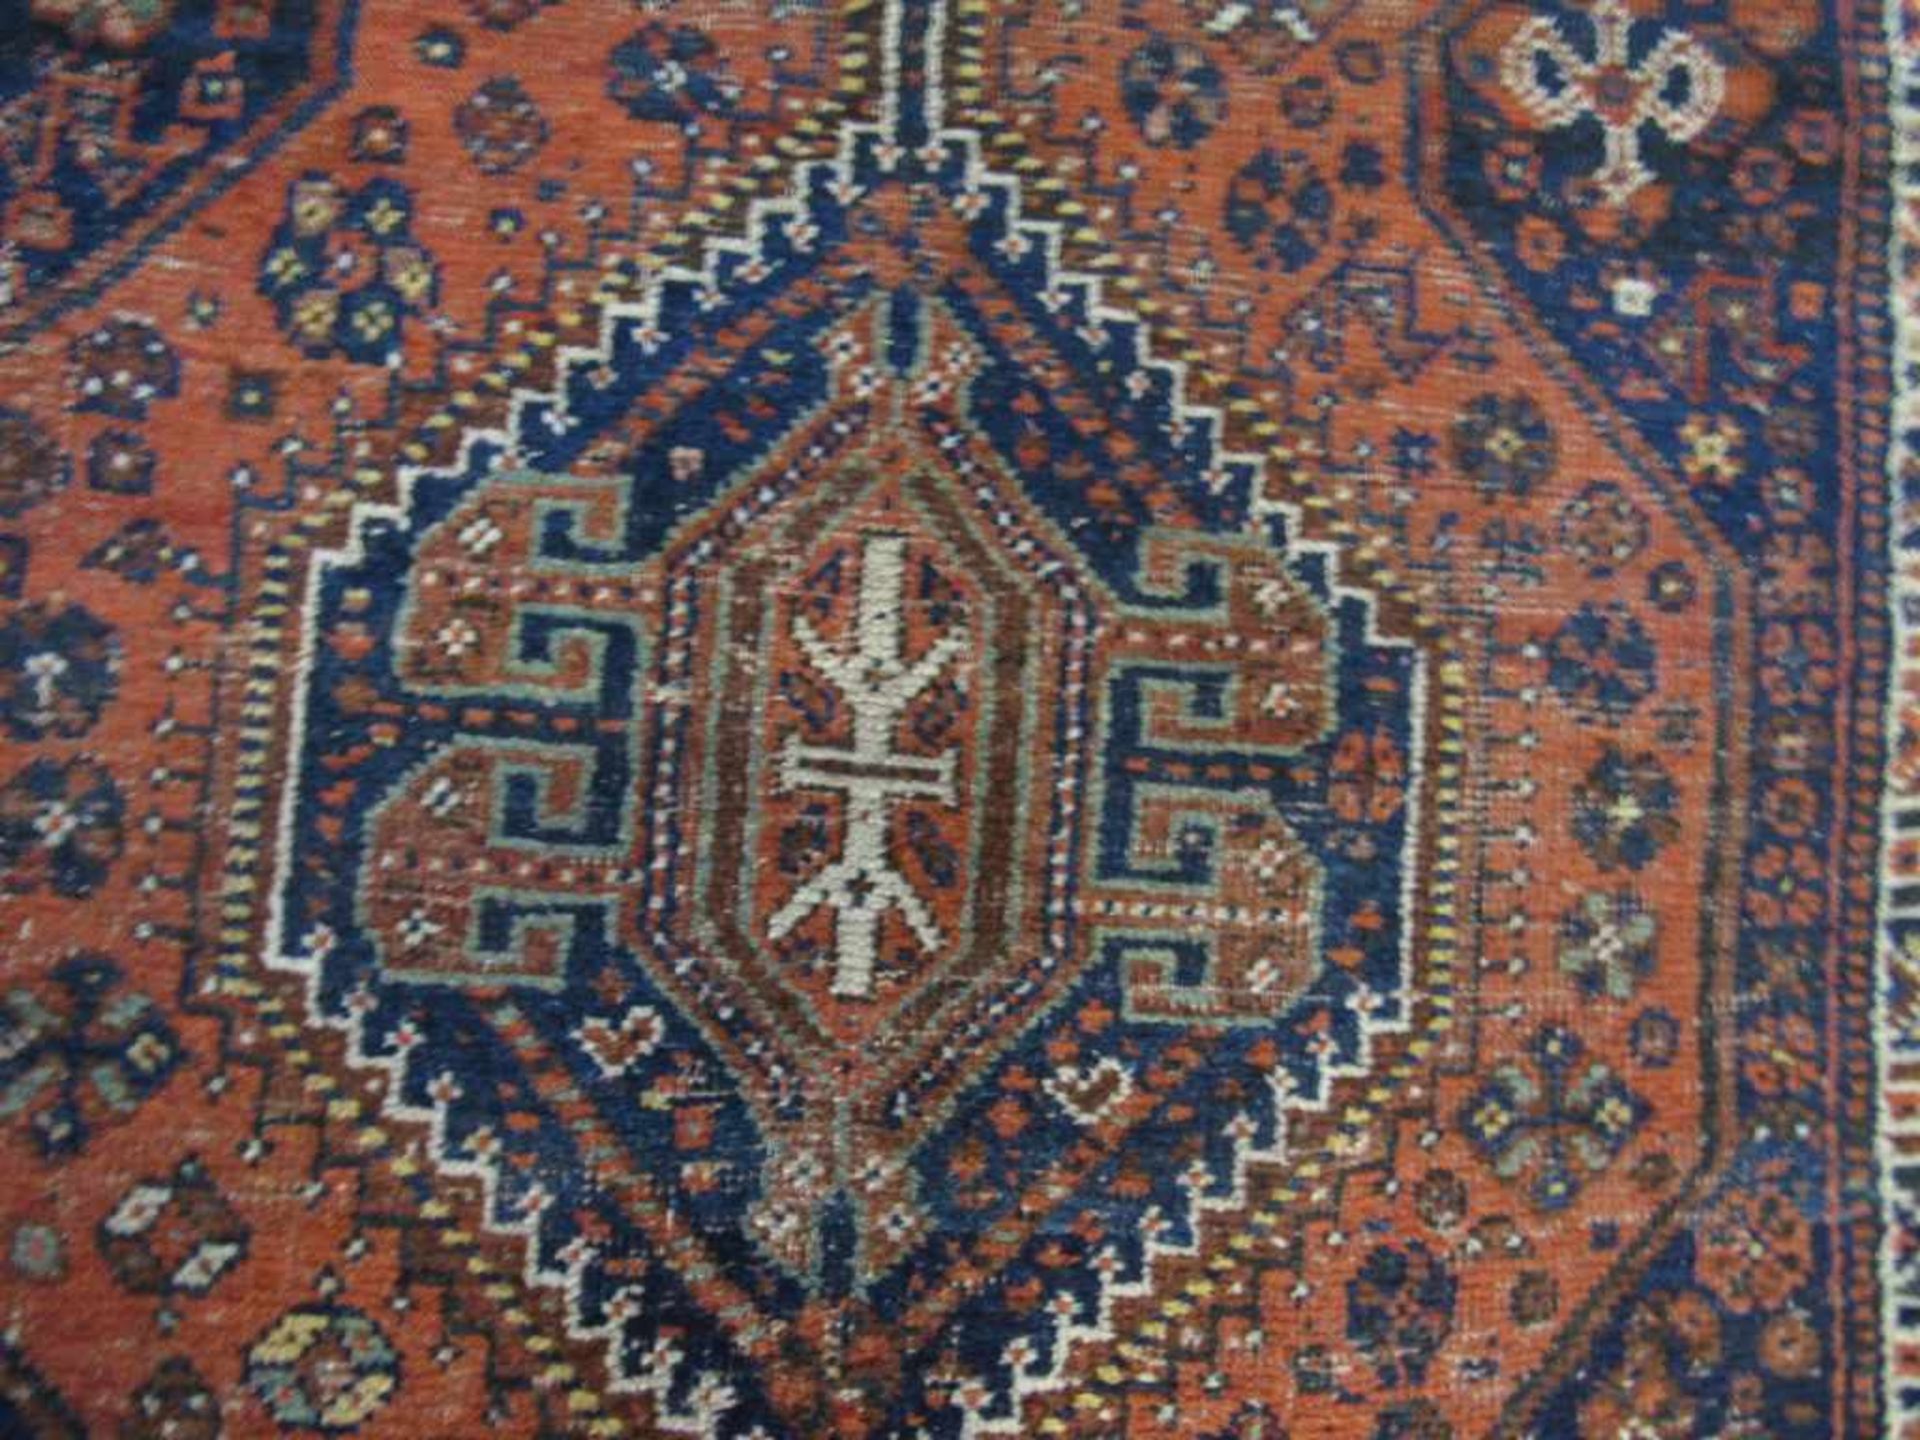 Teppich handgeknüpft rotgrundig 94x135cm - Image 2 of 3